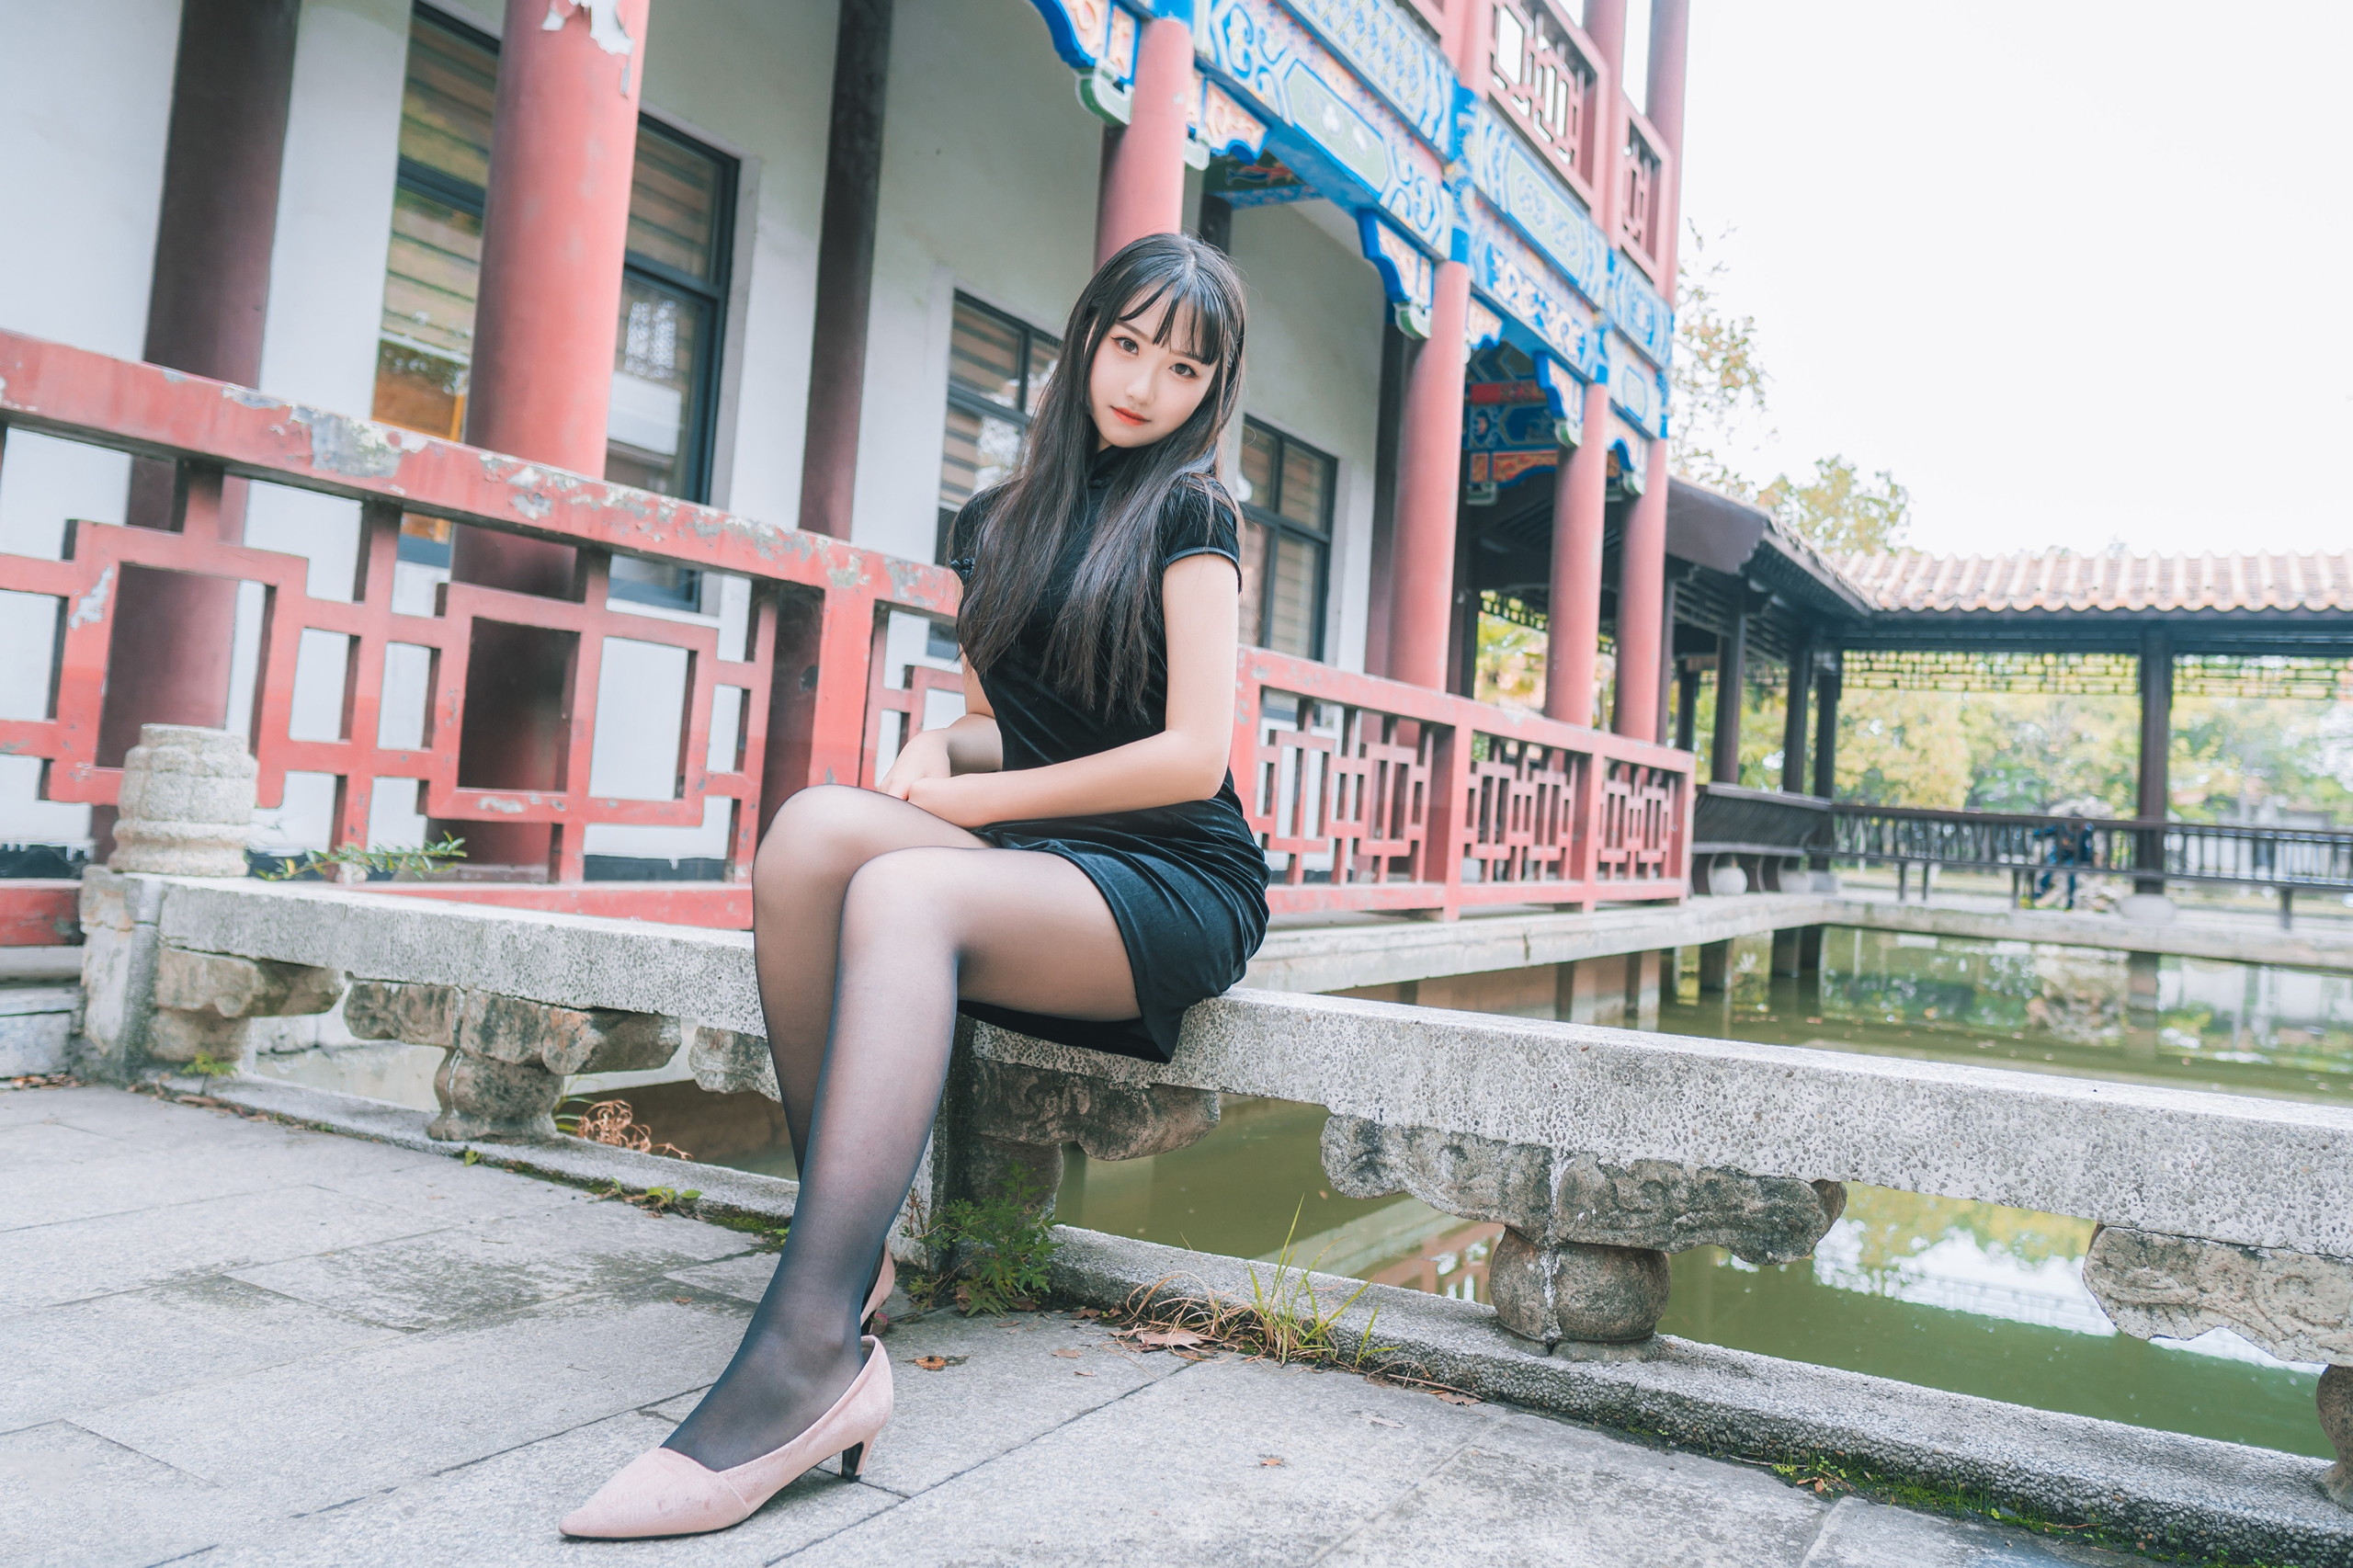 Asian Model Women Long Hair Dark Hair Black Dress Nylons Sitting Column Old Building Lake 2560x1706